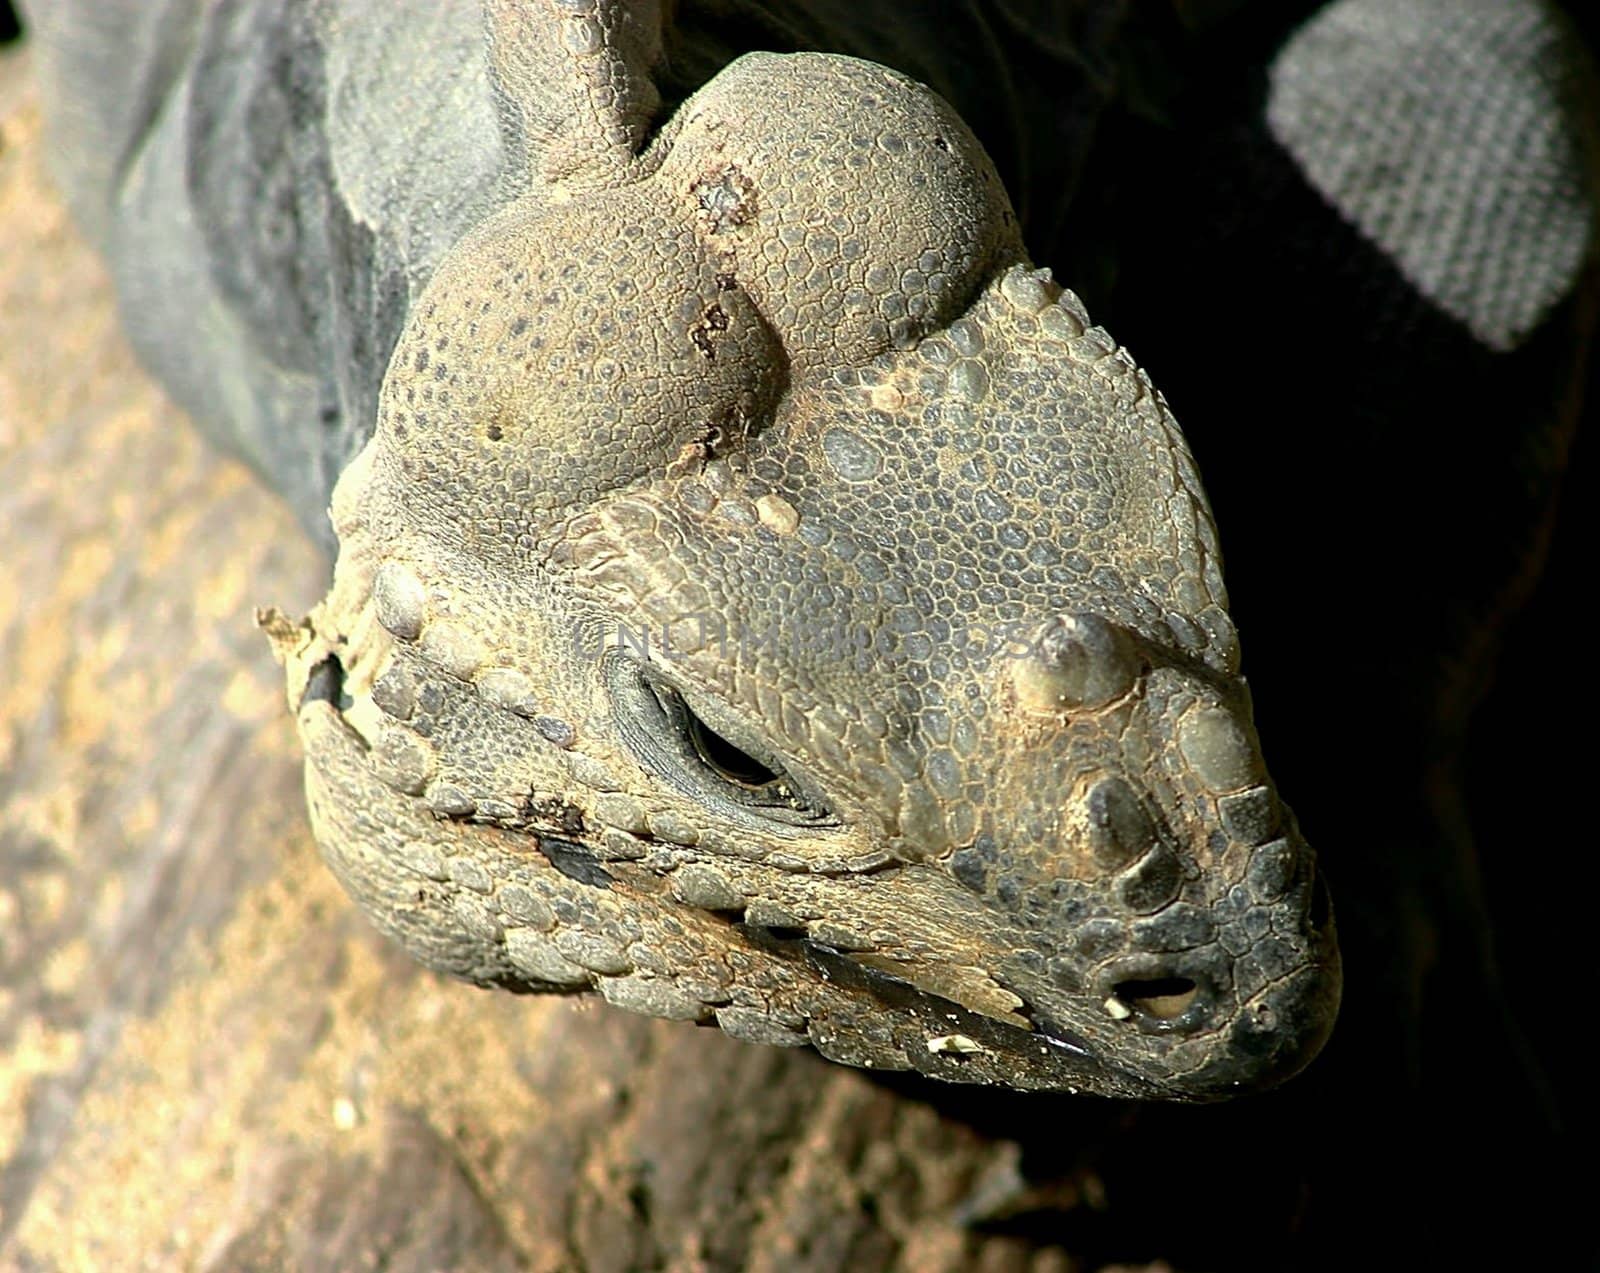 Close up of lizard's head